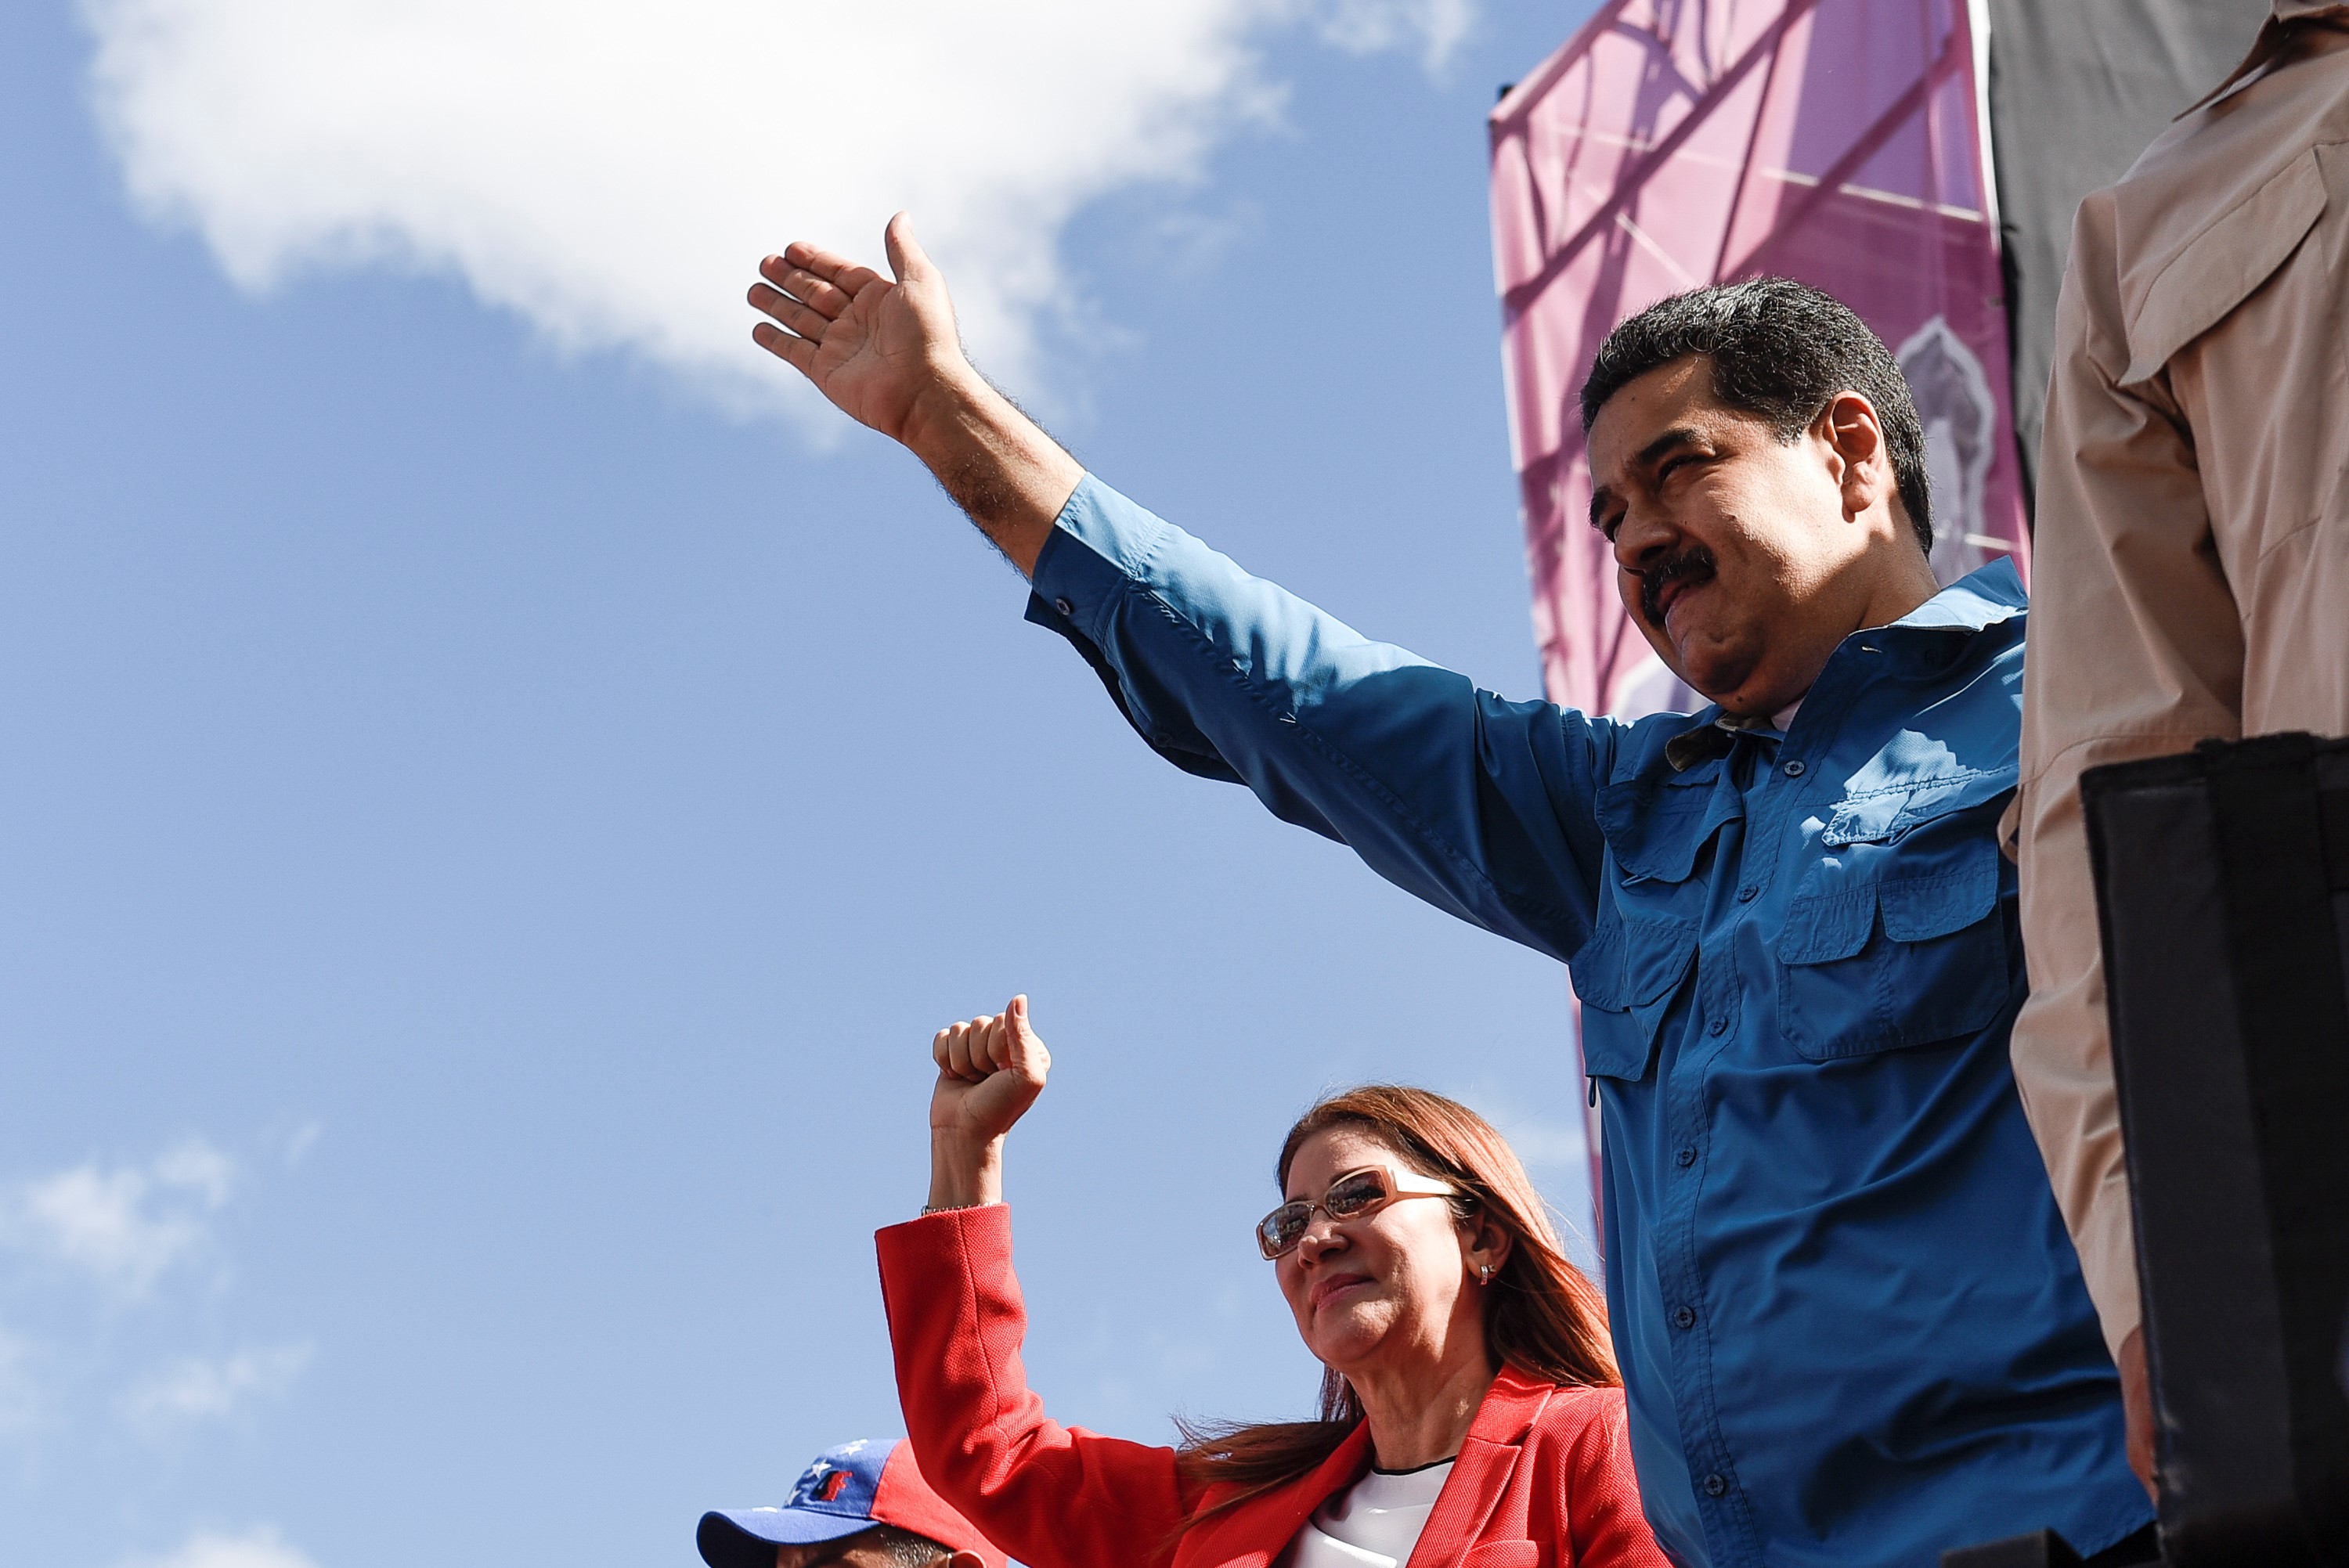 Venezuelan President Nicolas Maduro waves to his supporters during a rally in Caracas, Venezuela on Jan. 23, 2018. (Anadolu Agency&mdash;Getty Images)